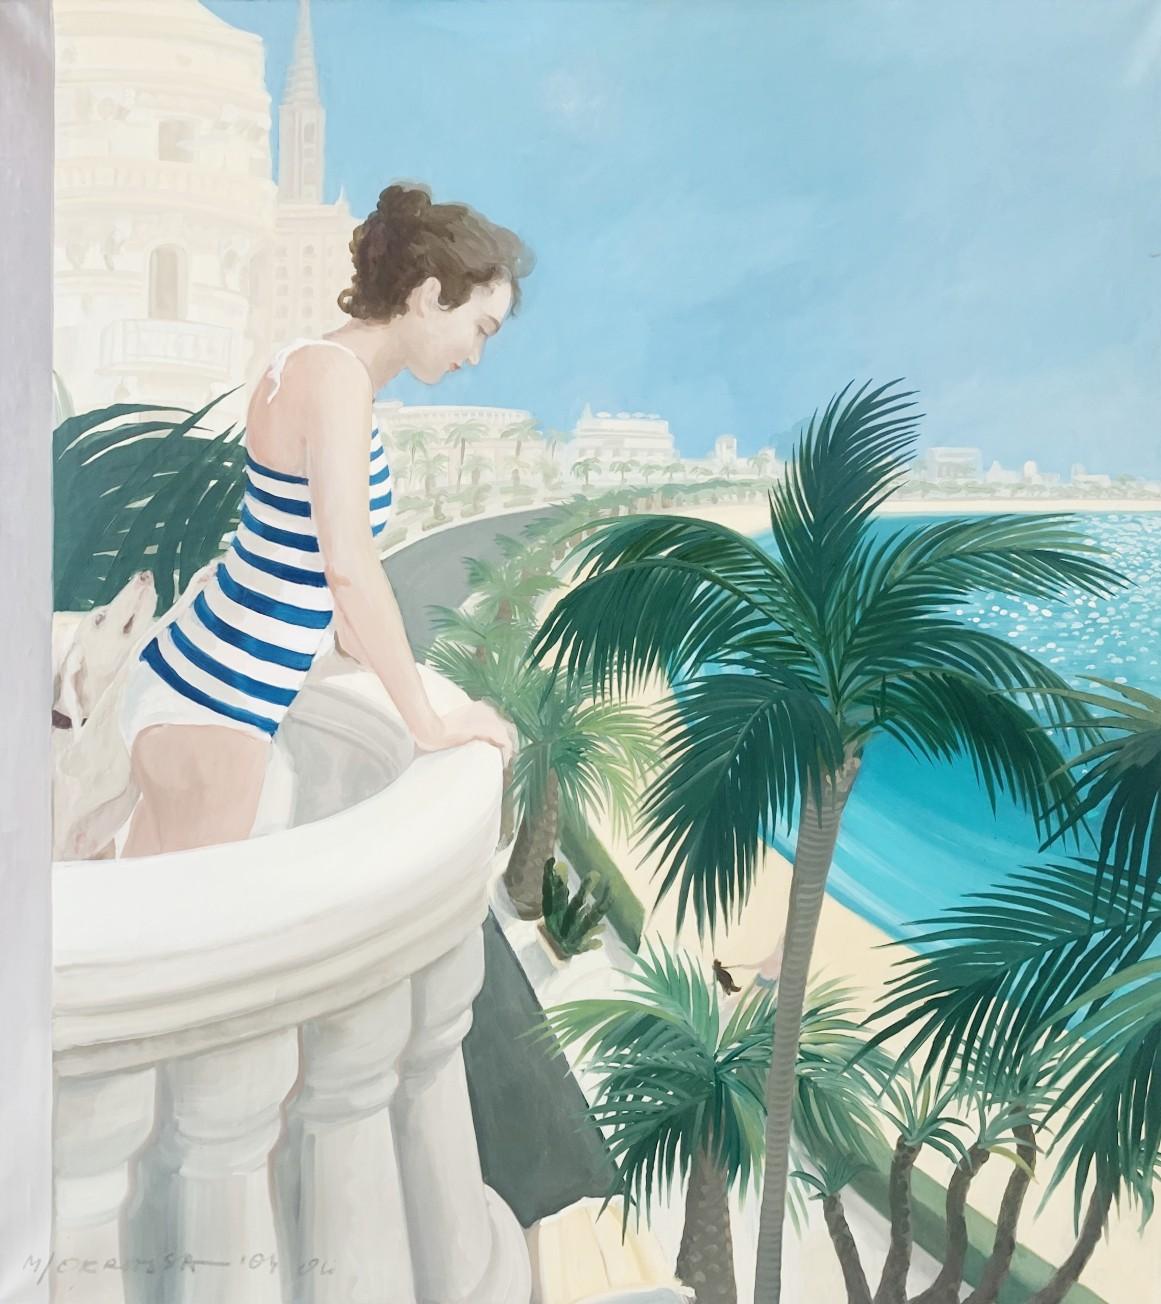 Saint Tropez - Oil on canvas, Figurative realist painting, Polish art